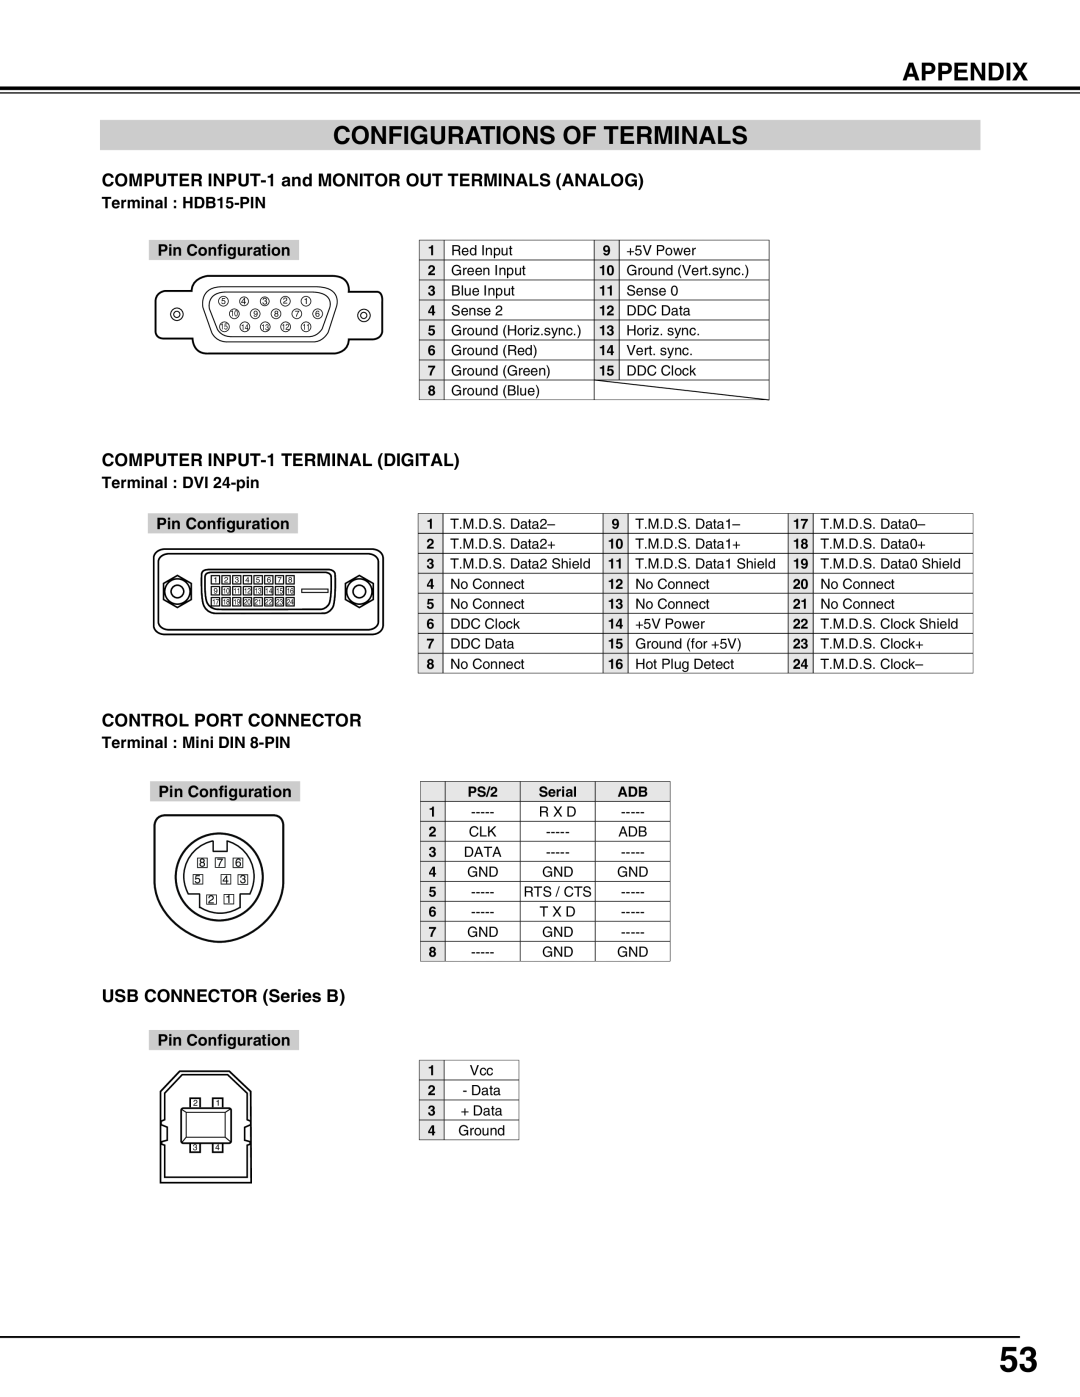 Eiki LC-X60 Appendix Configurations Of Terminals, Terminal HDB15-PIN, Pin Configuration, Terminal DVI 24-pin 